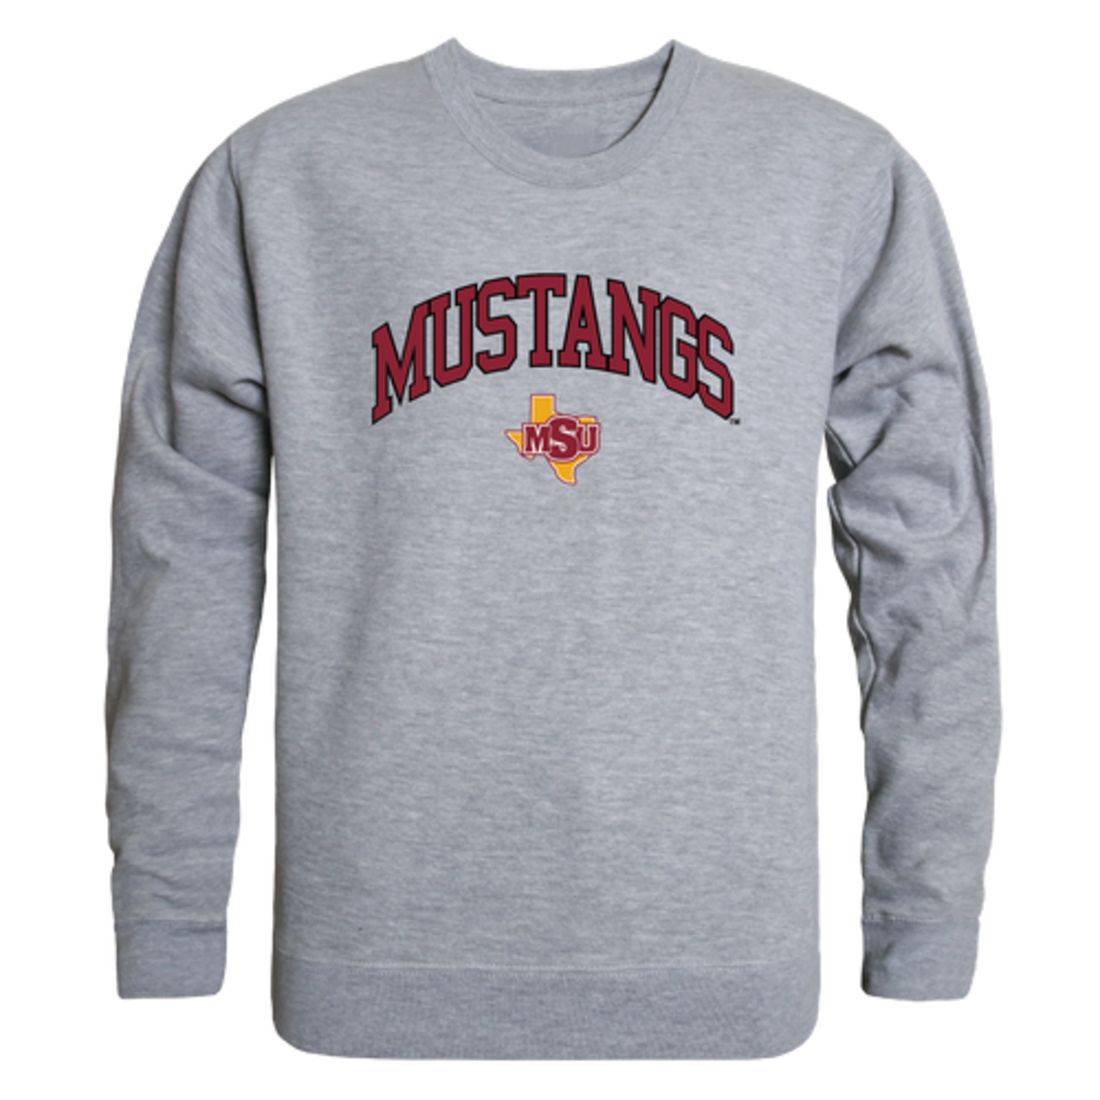 Midwestern-State-University-Mustangs-Campus-Fleece-Crewneck-Pullover-Sweatshirt